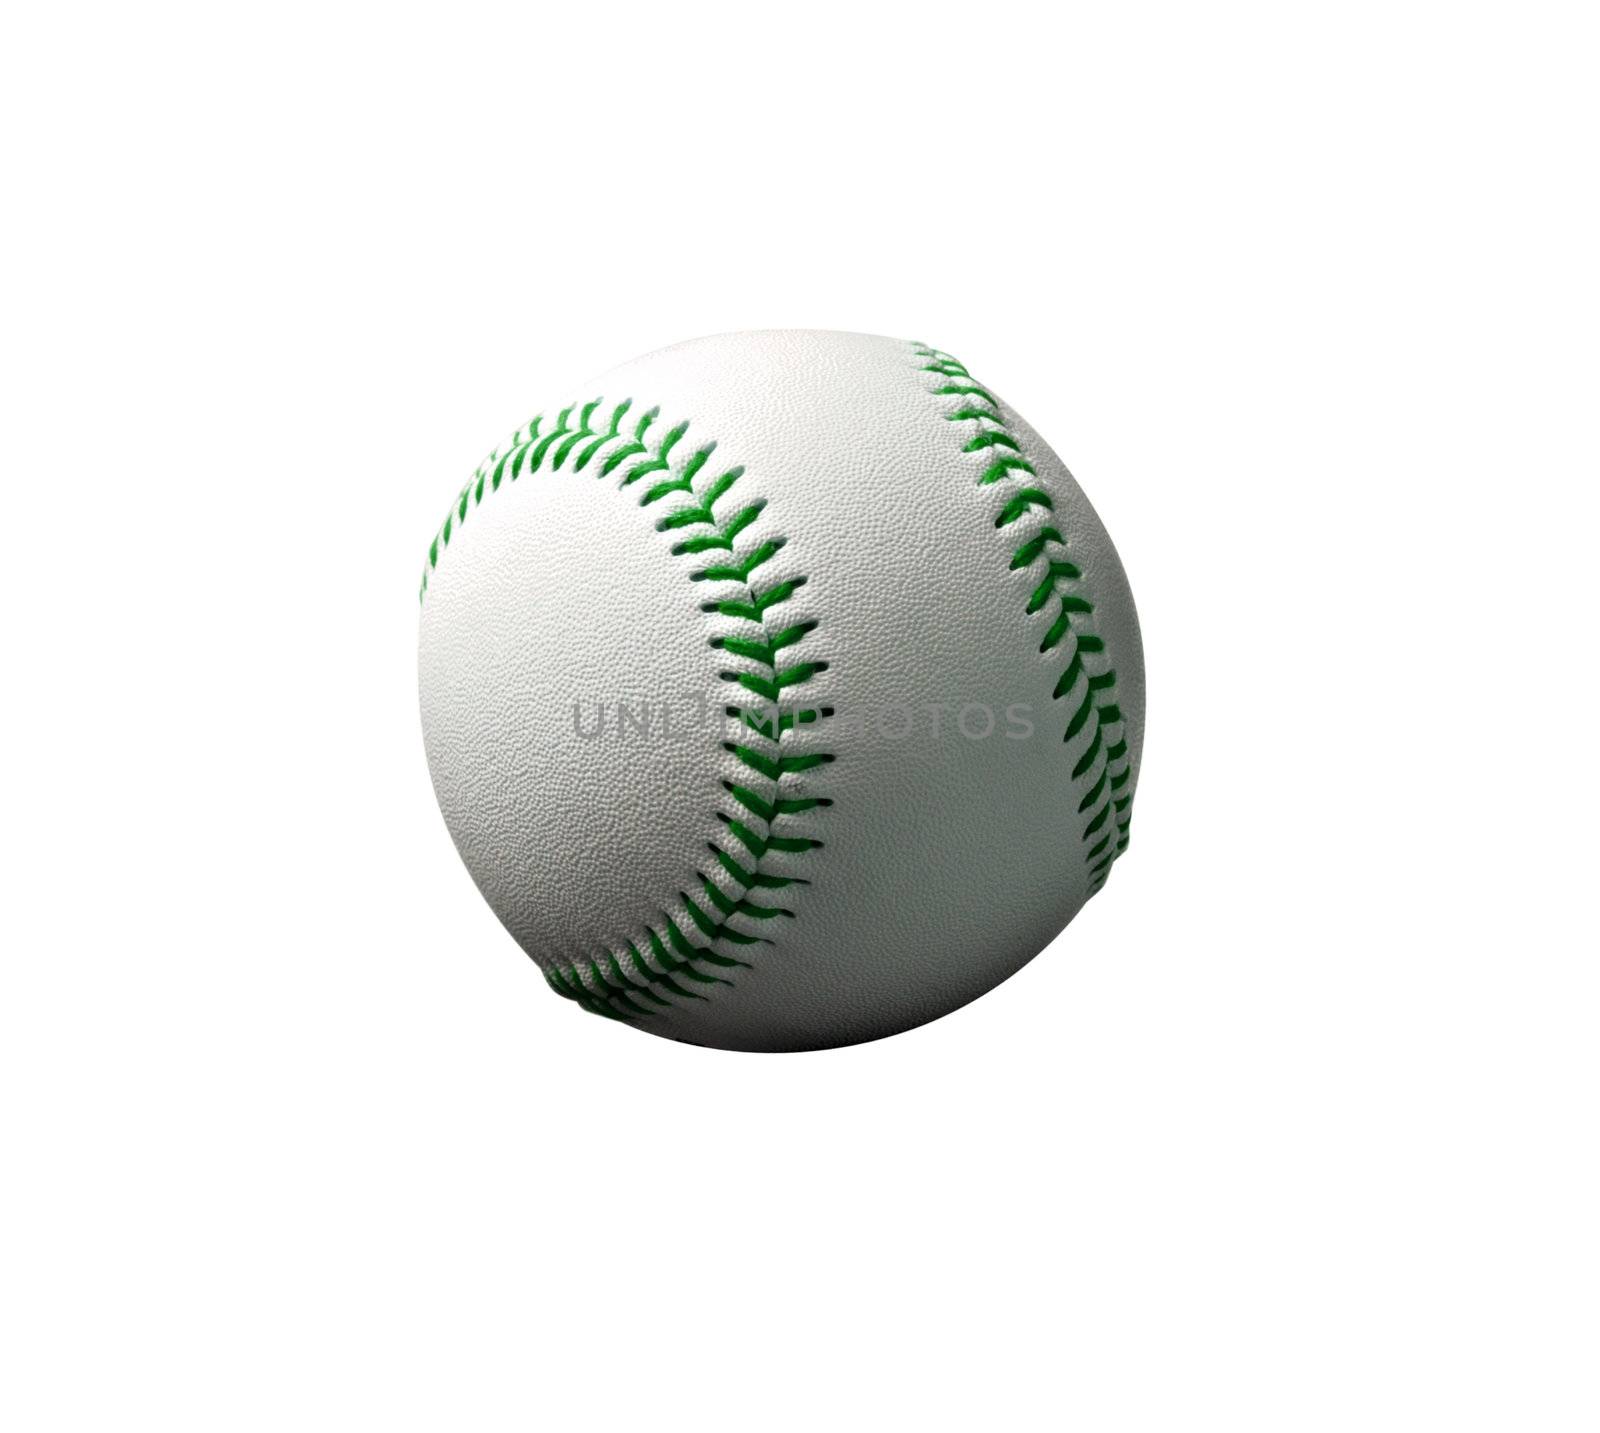 Baseball ball by ozaiachin